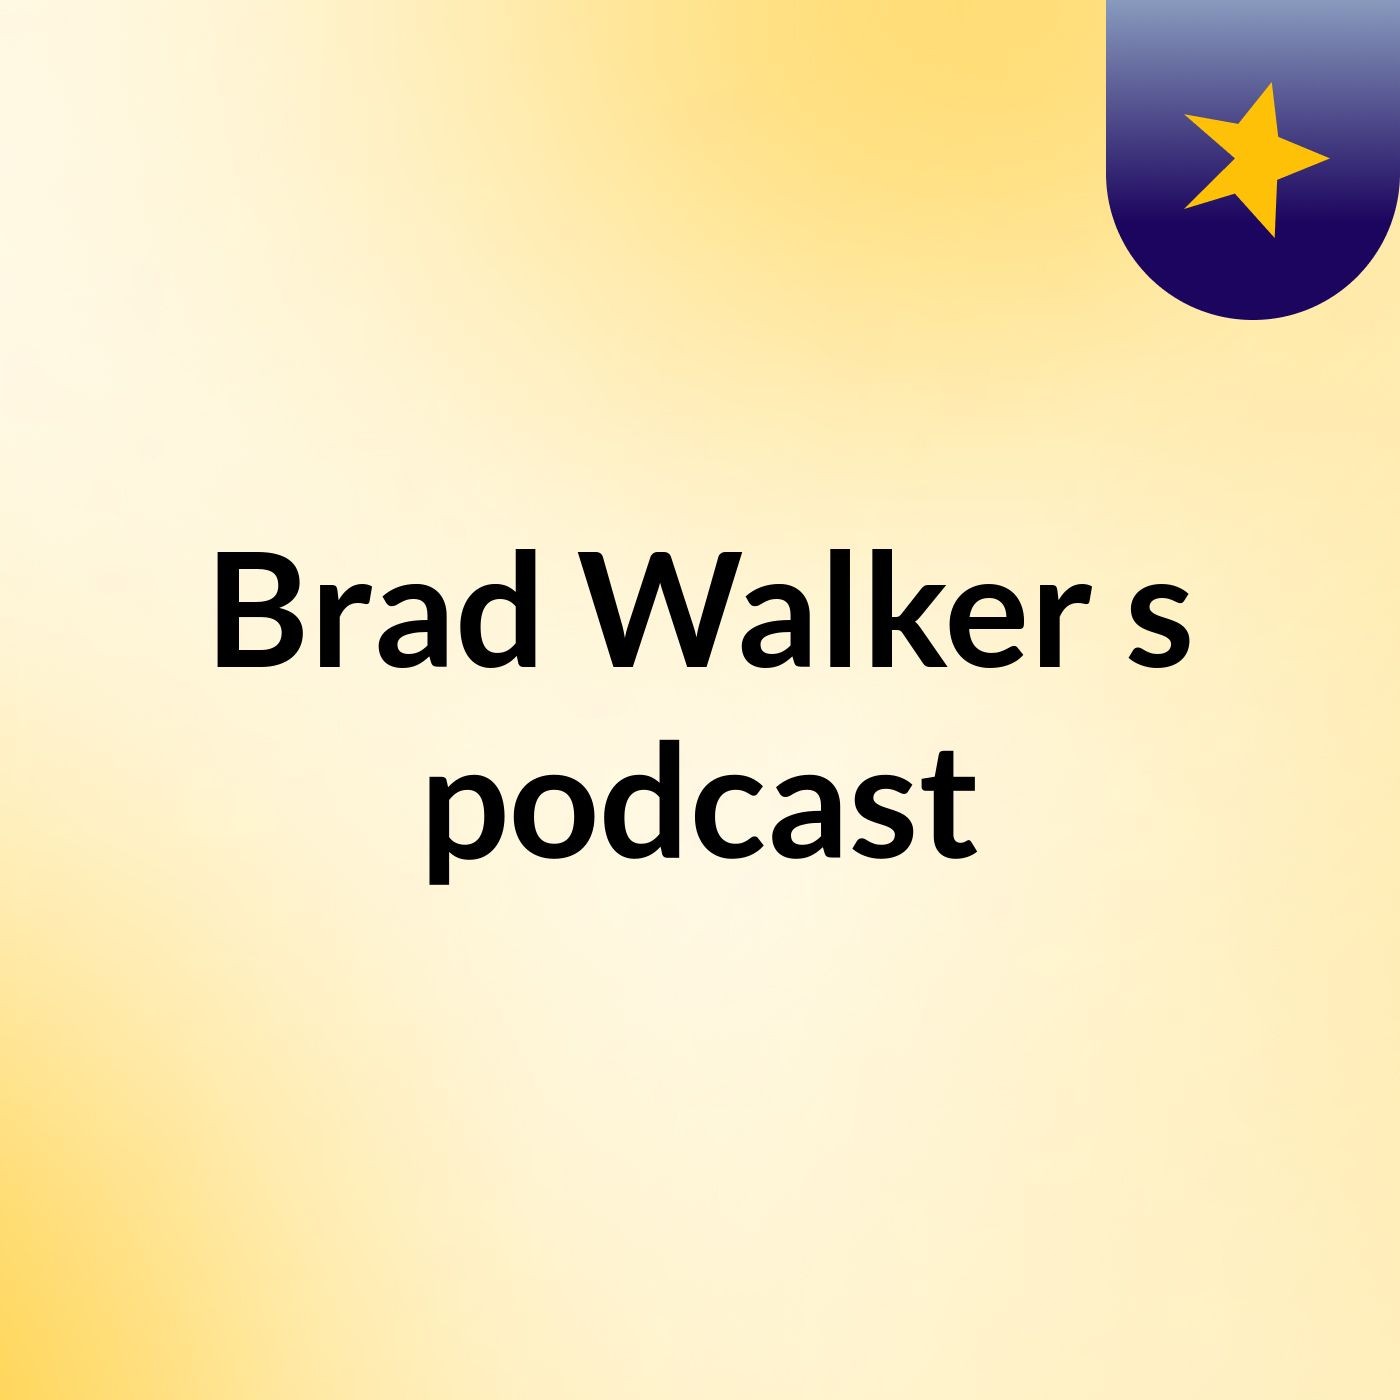 Episode 6 - Brad Walker's podcast